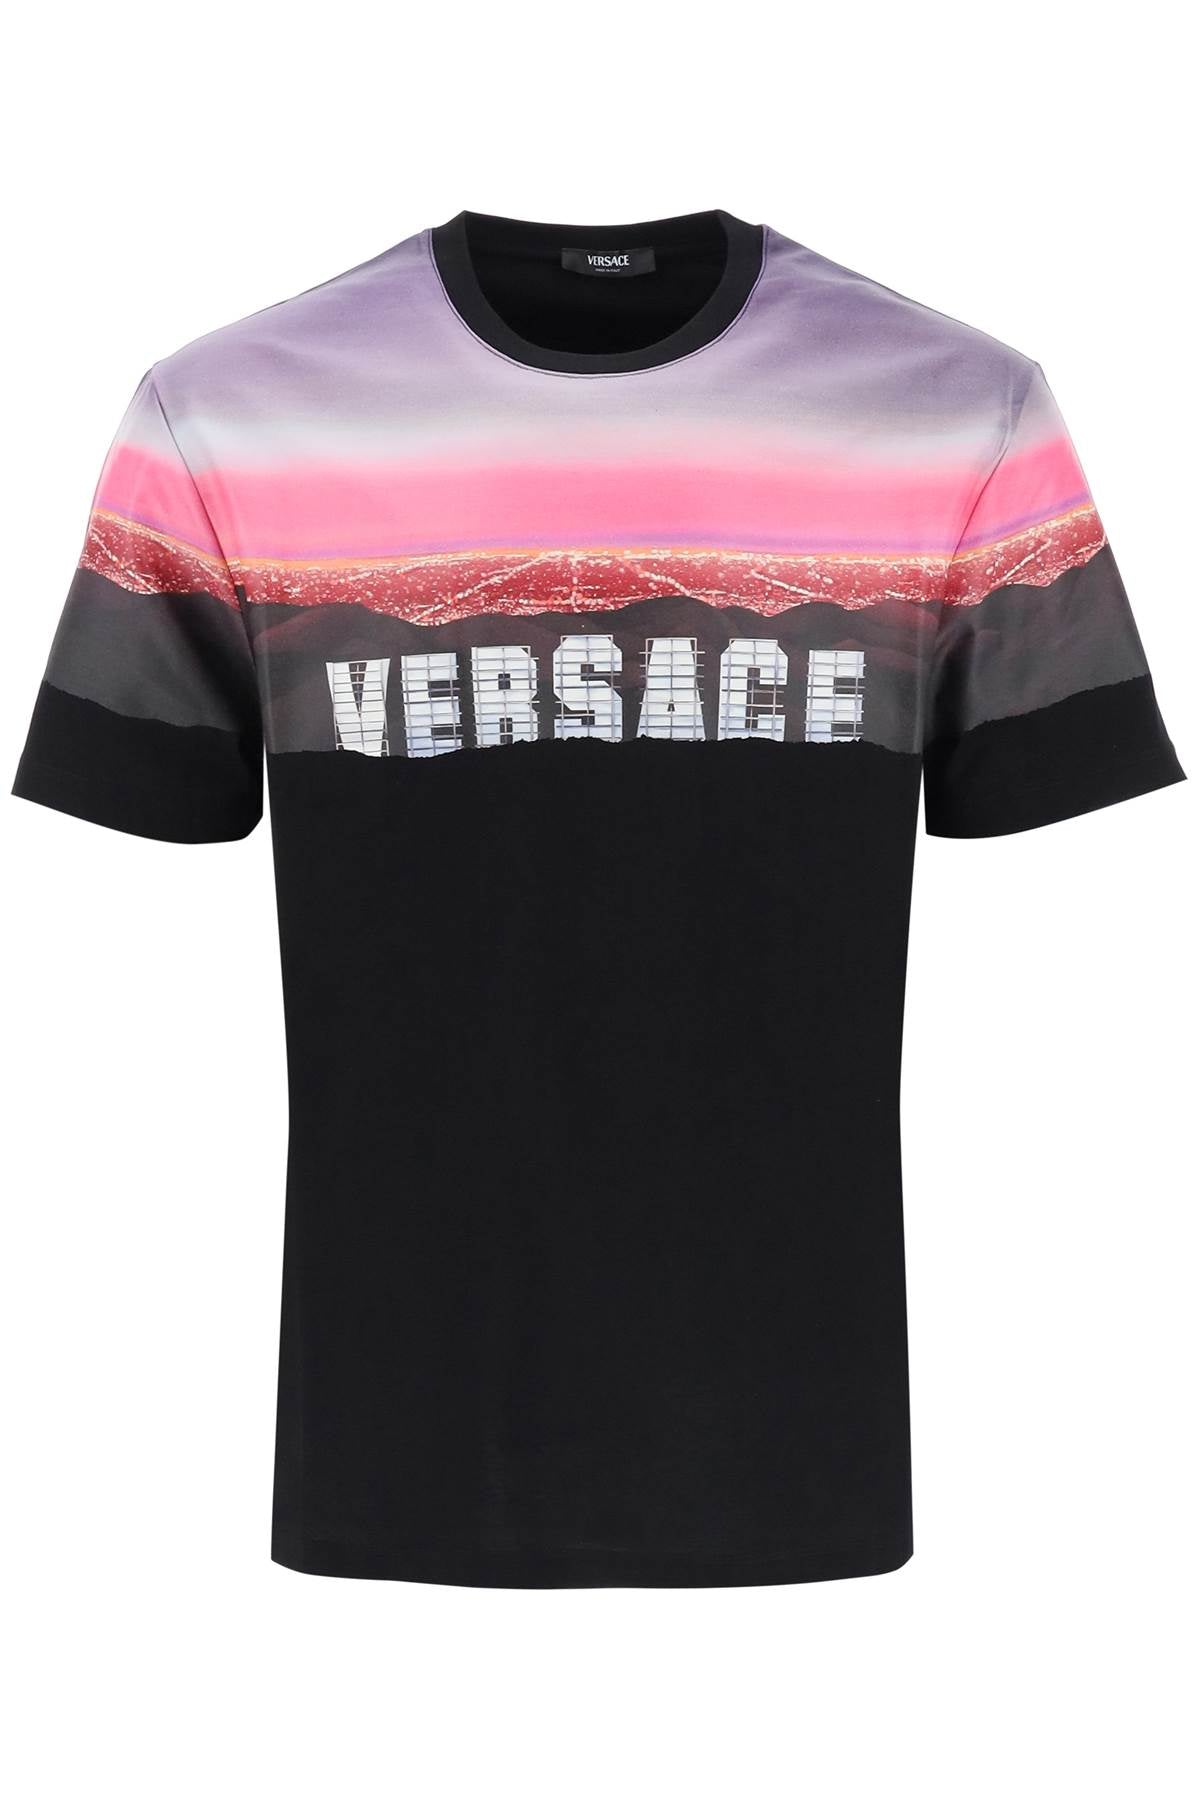 Versace Versace Hills T-Shirt-Clothing - Men-Versace-Urbanheer